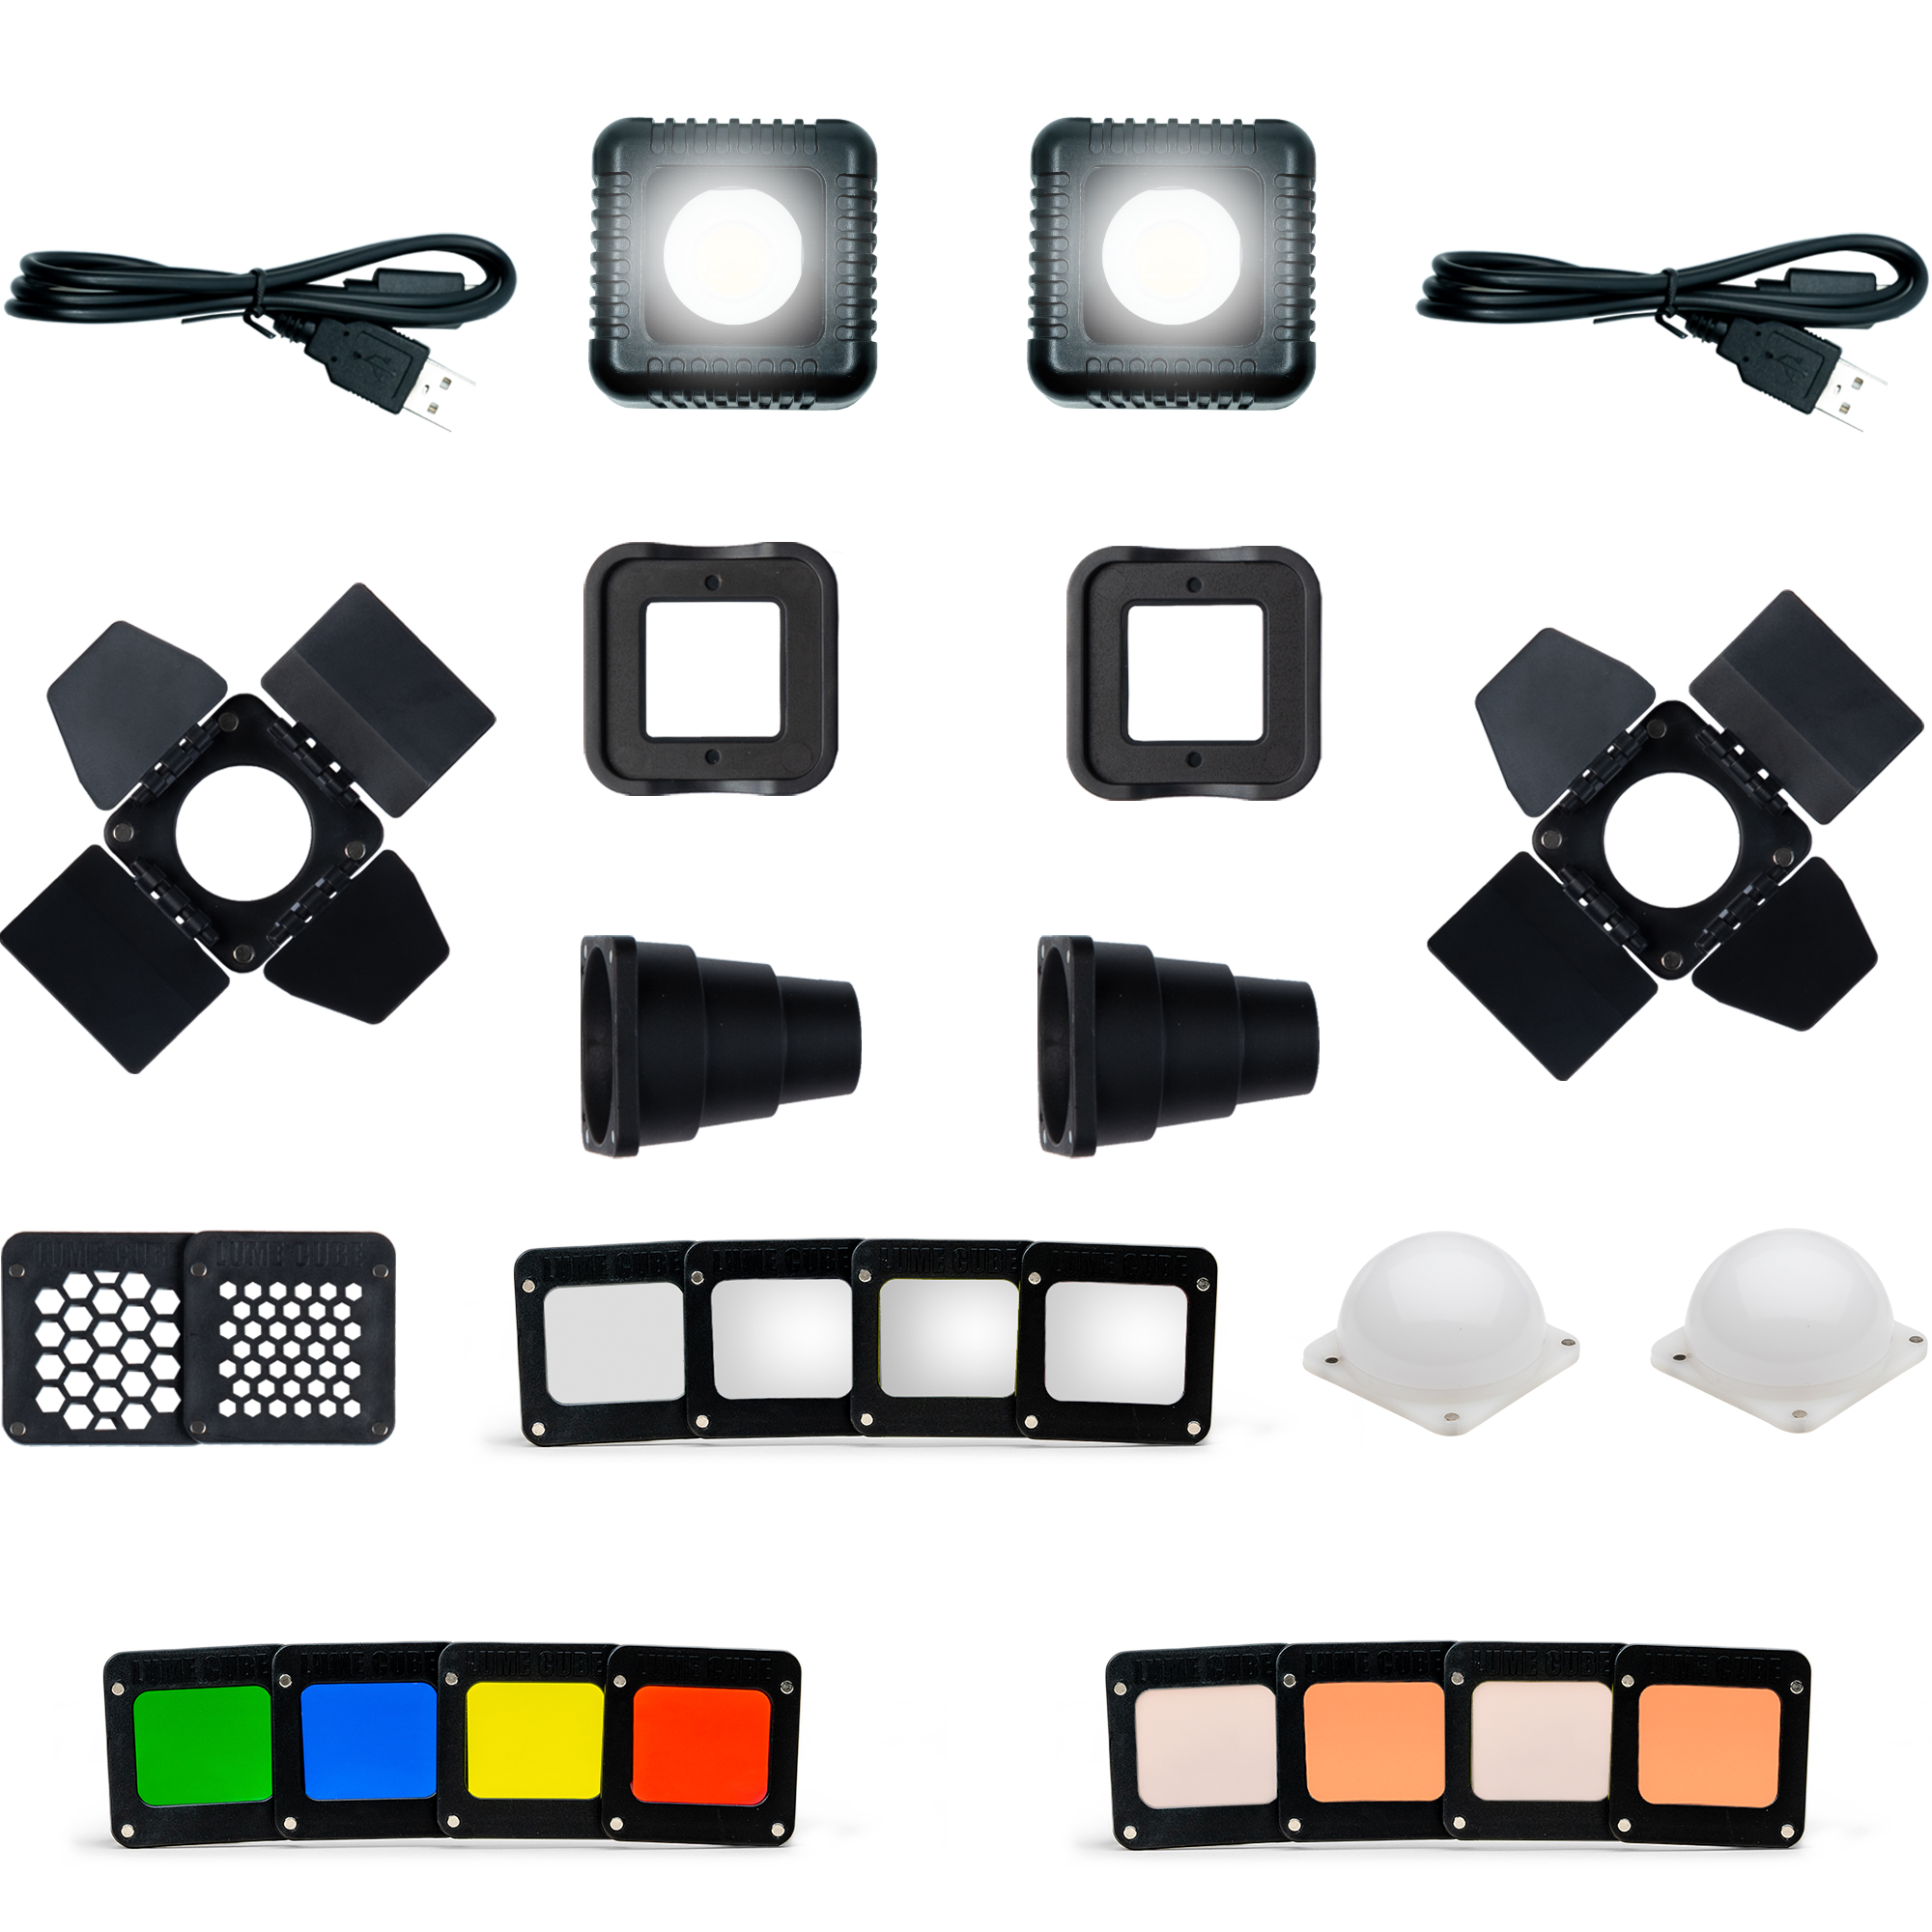 Passiv Moden indtryk Lume Cube 2.0 Pro Lighting Kit by Lume Cube | LMC-LC-V2PROLK | LCU1180523